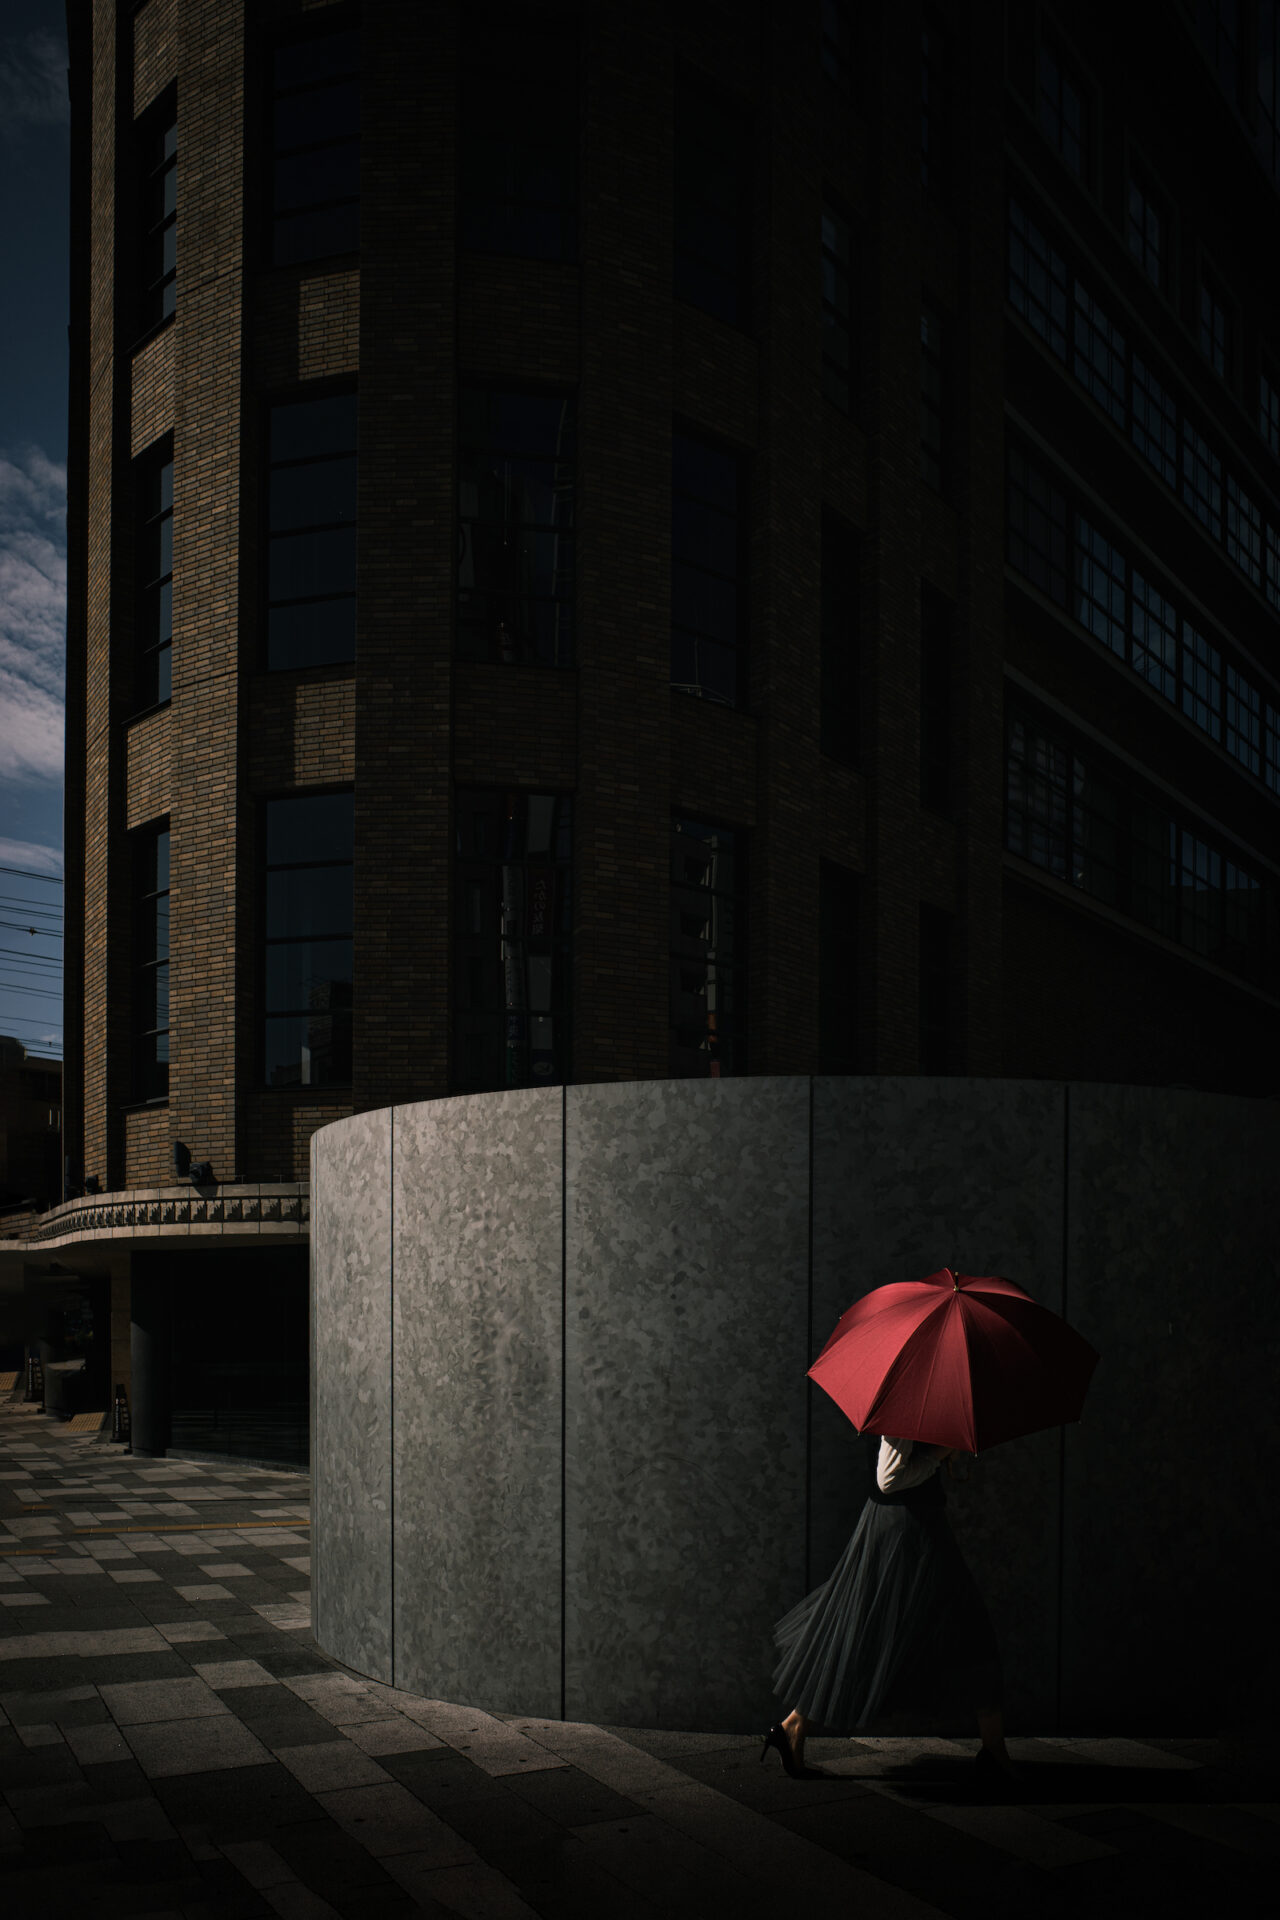 RICOH GR III Diary Editionで撮影した街を歩く赤い傘の女性